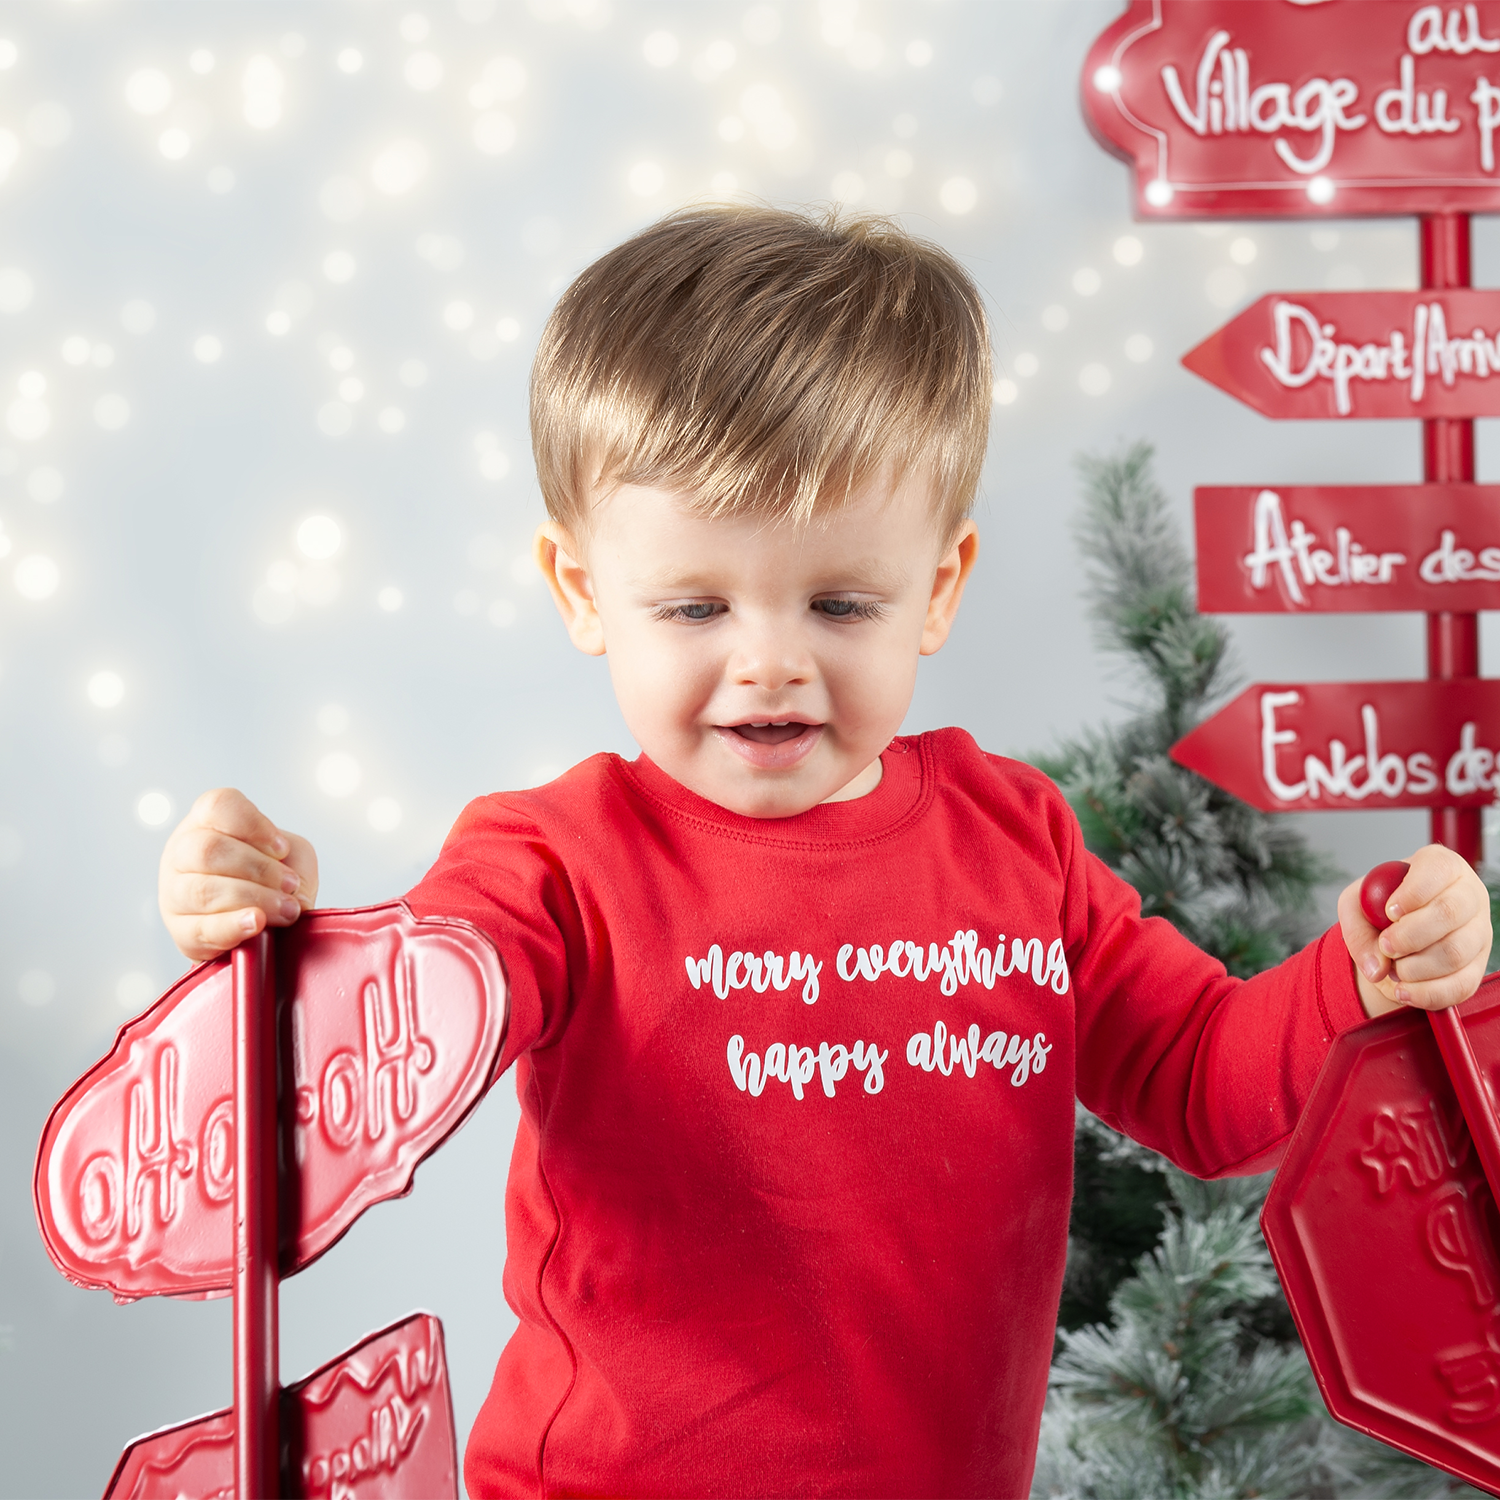 'Merry everything, Happy always' baby shirt met lange mouwen